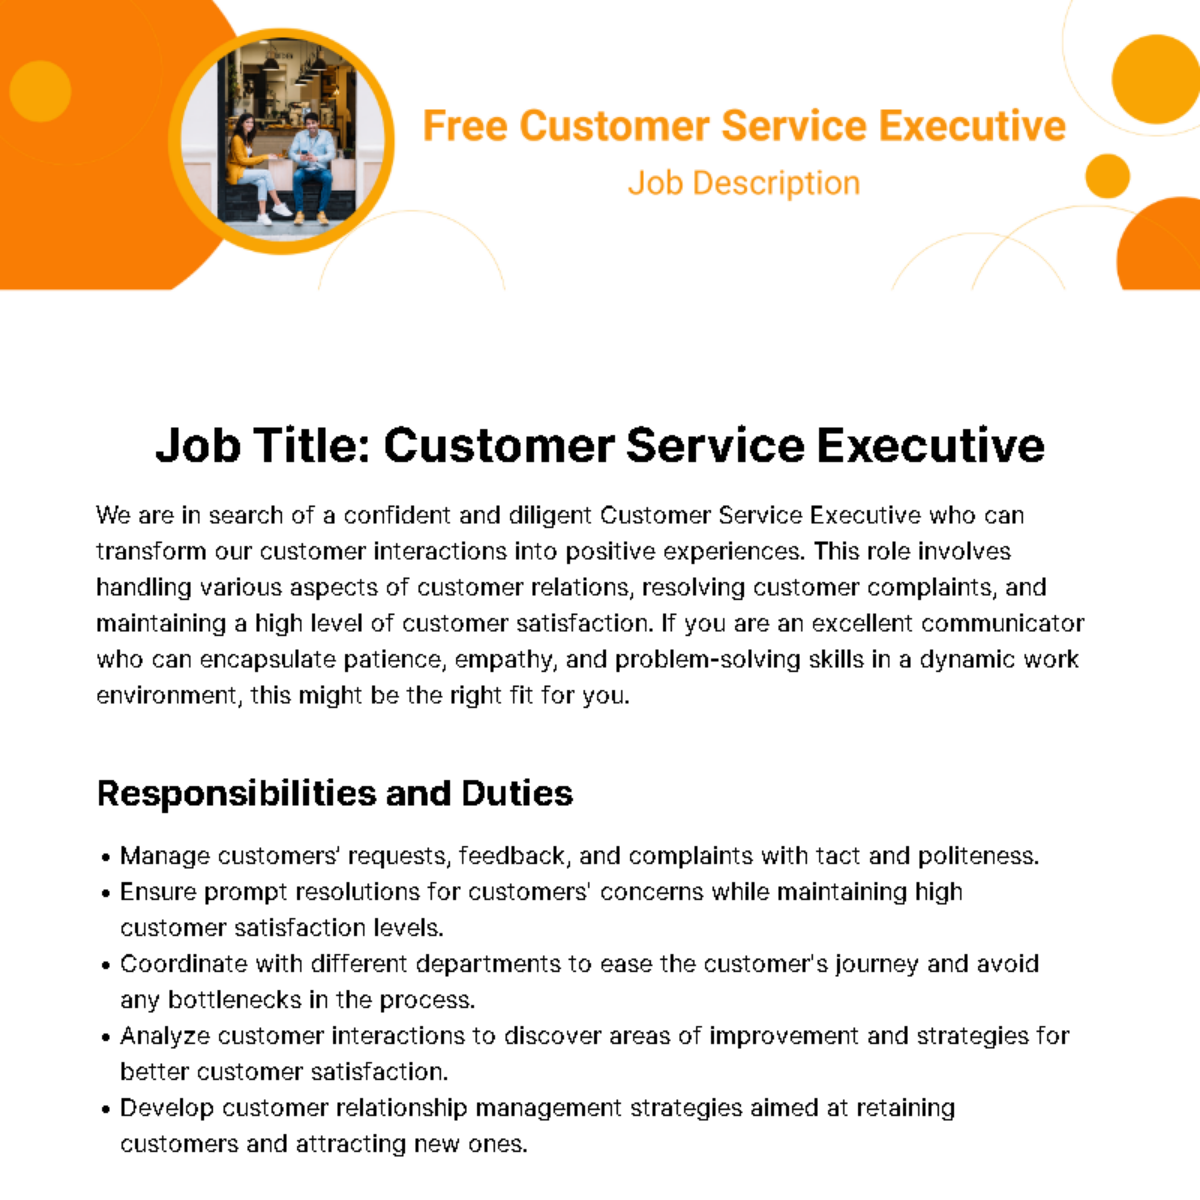 Free Customer Service Executive Job Description Template